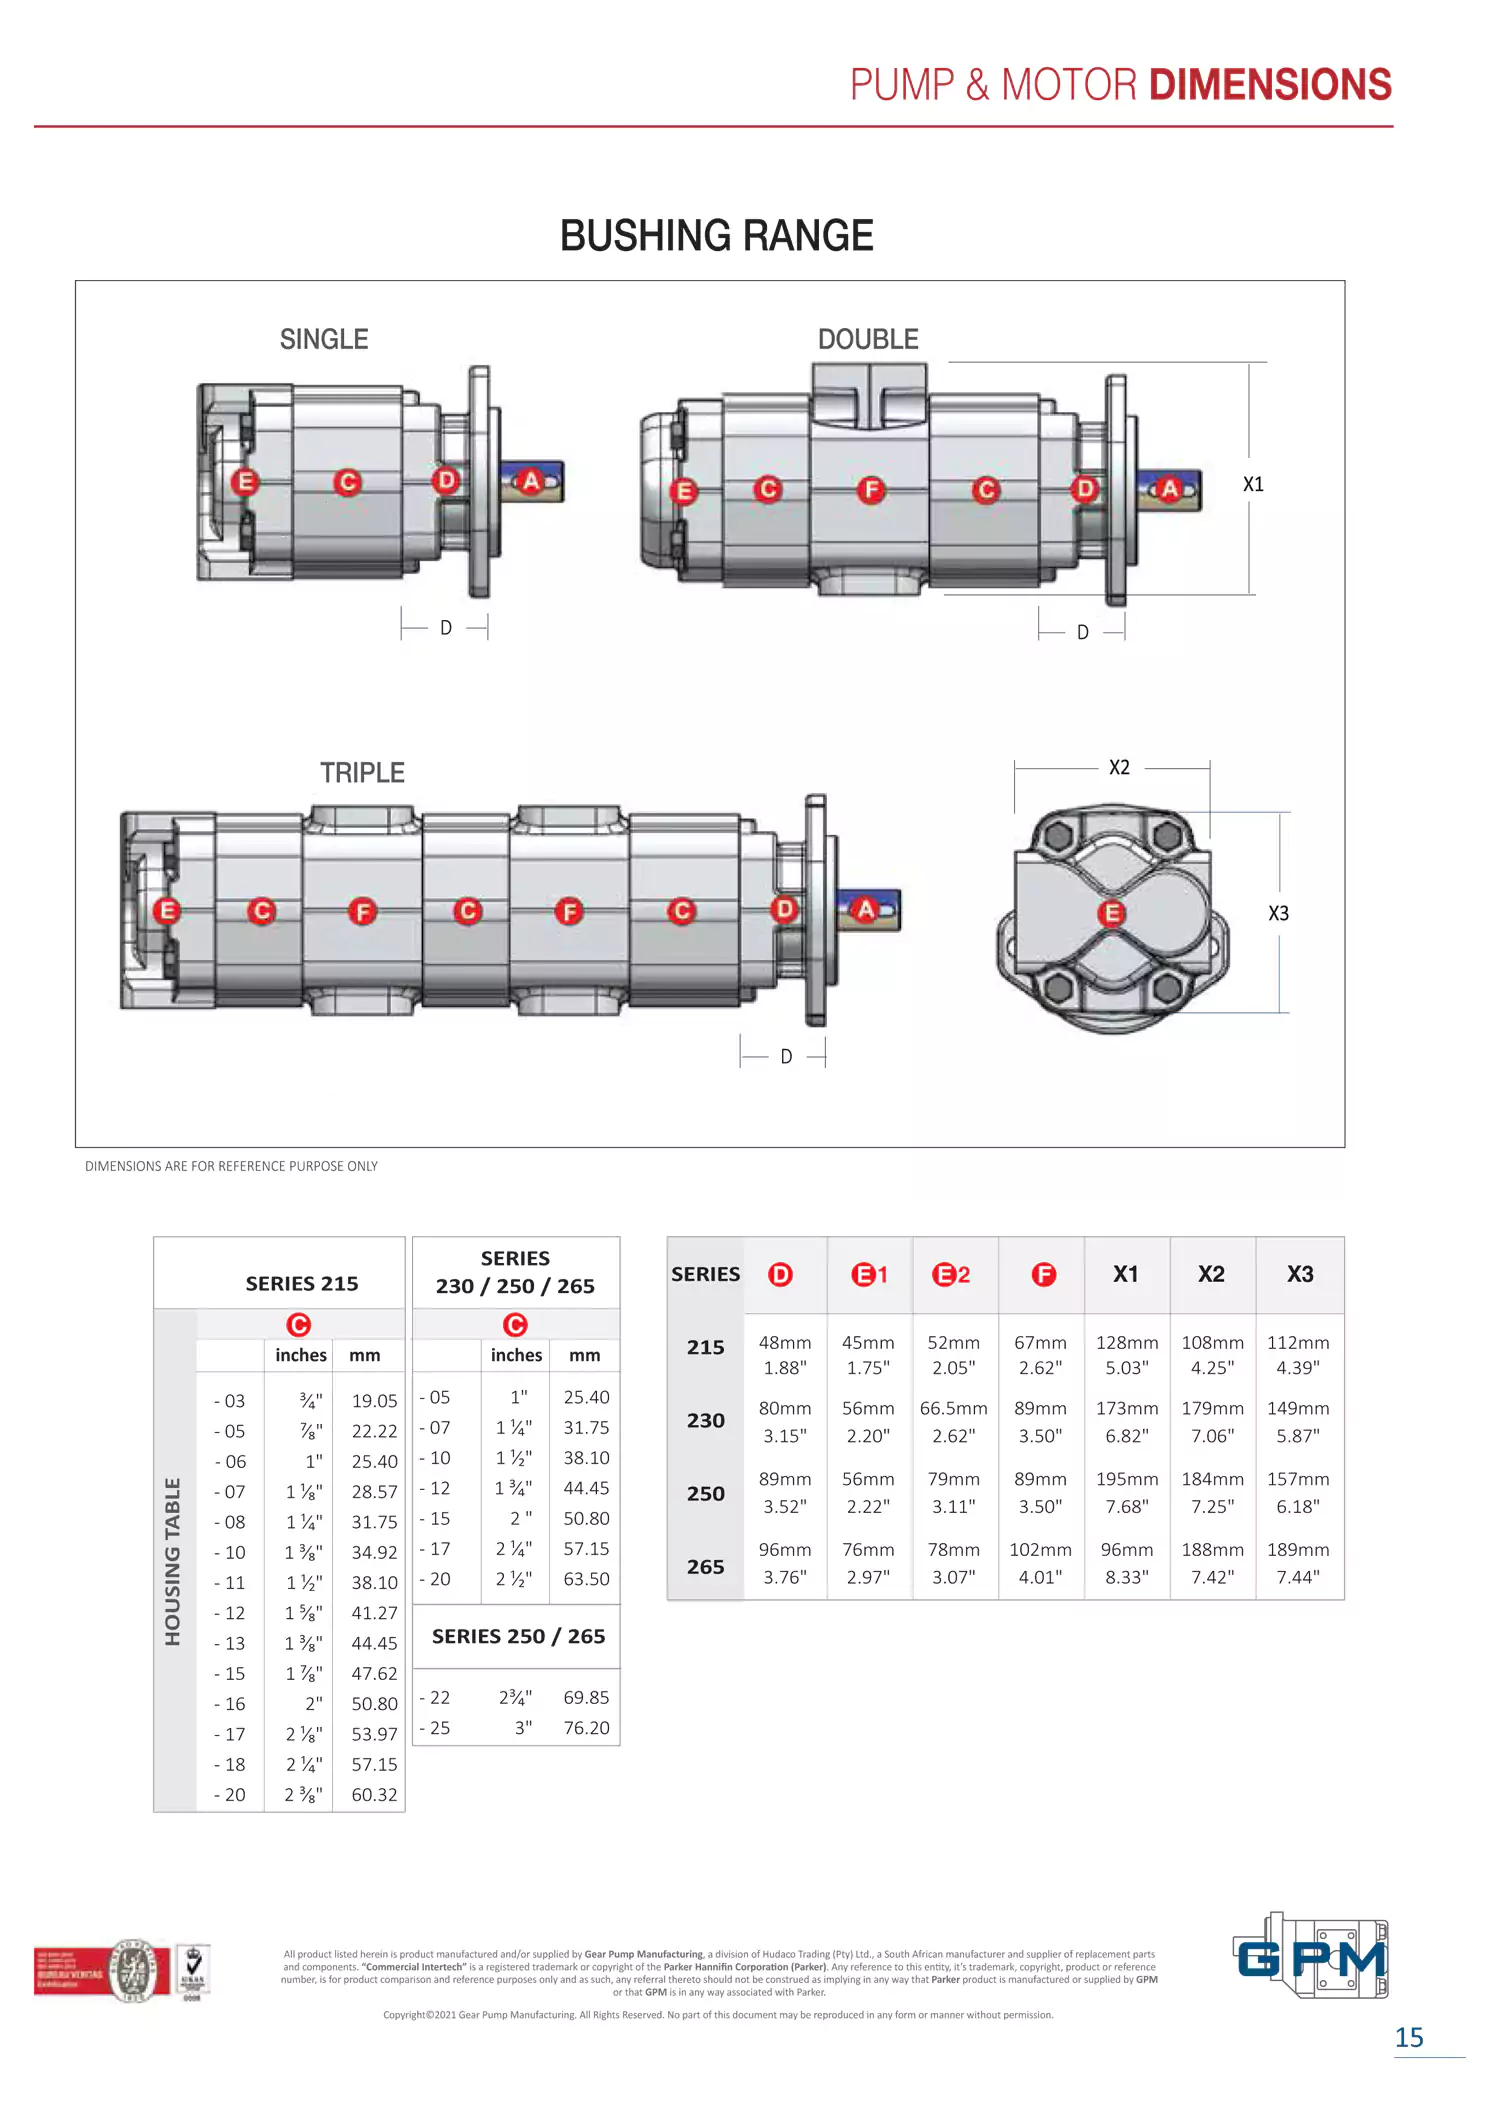 Page-15 - Pump & Motor Dimensions - Bushing Range